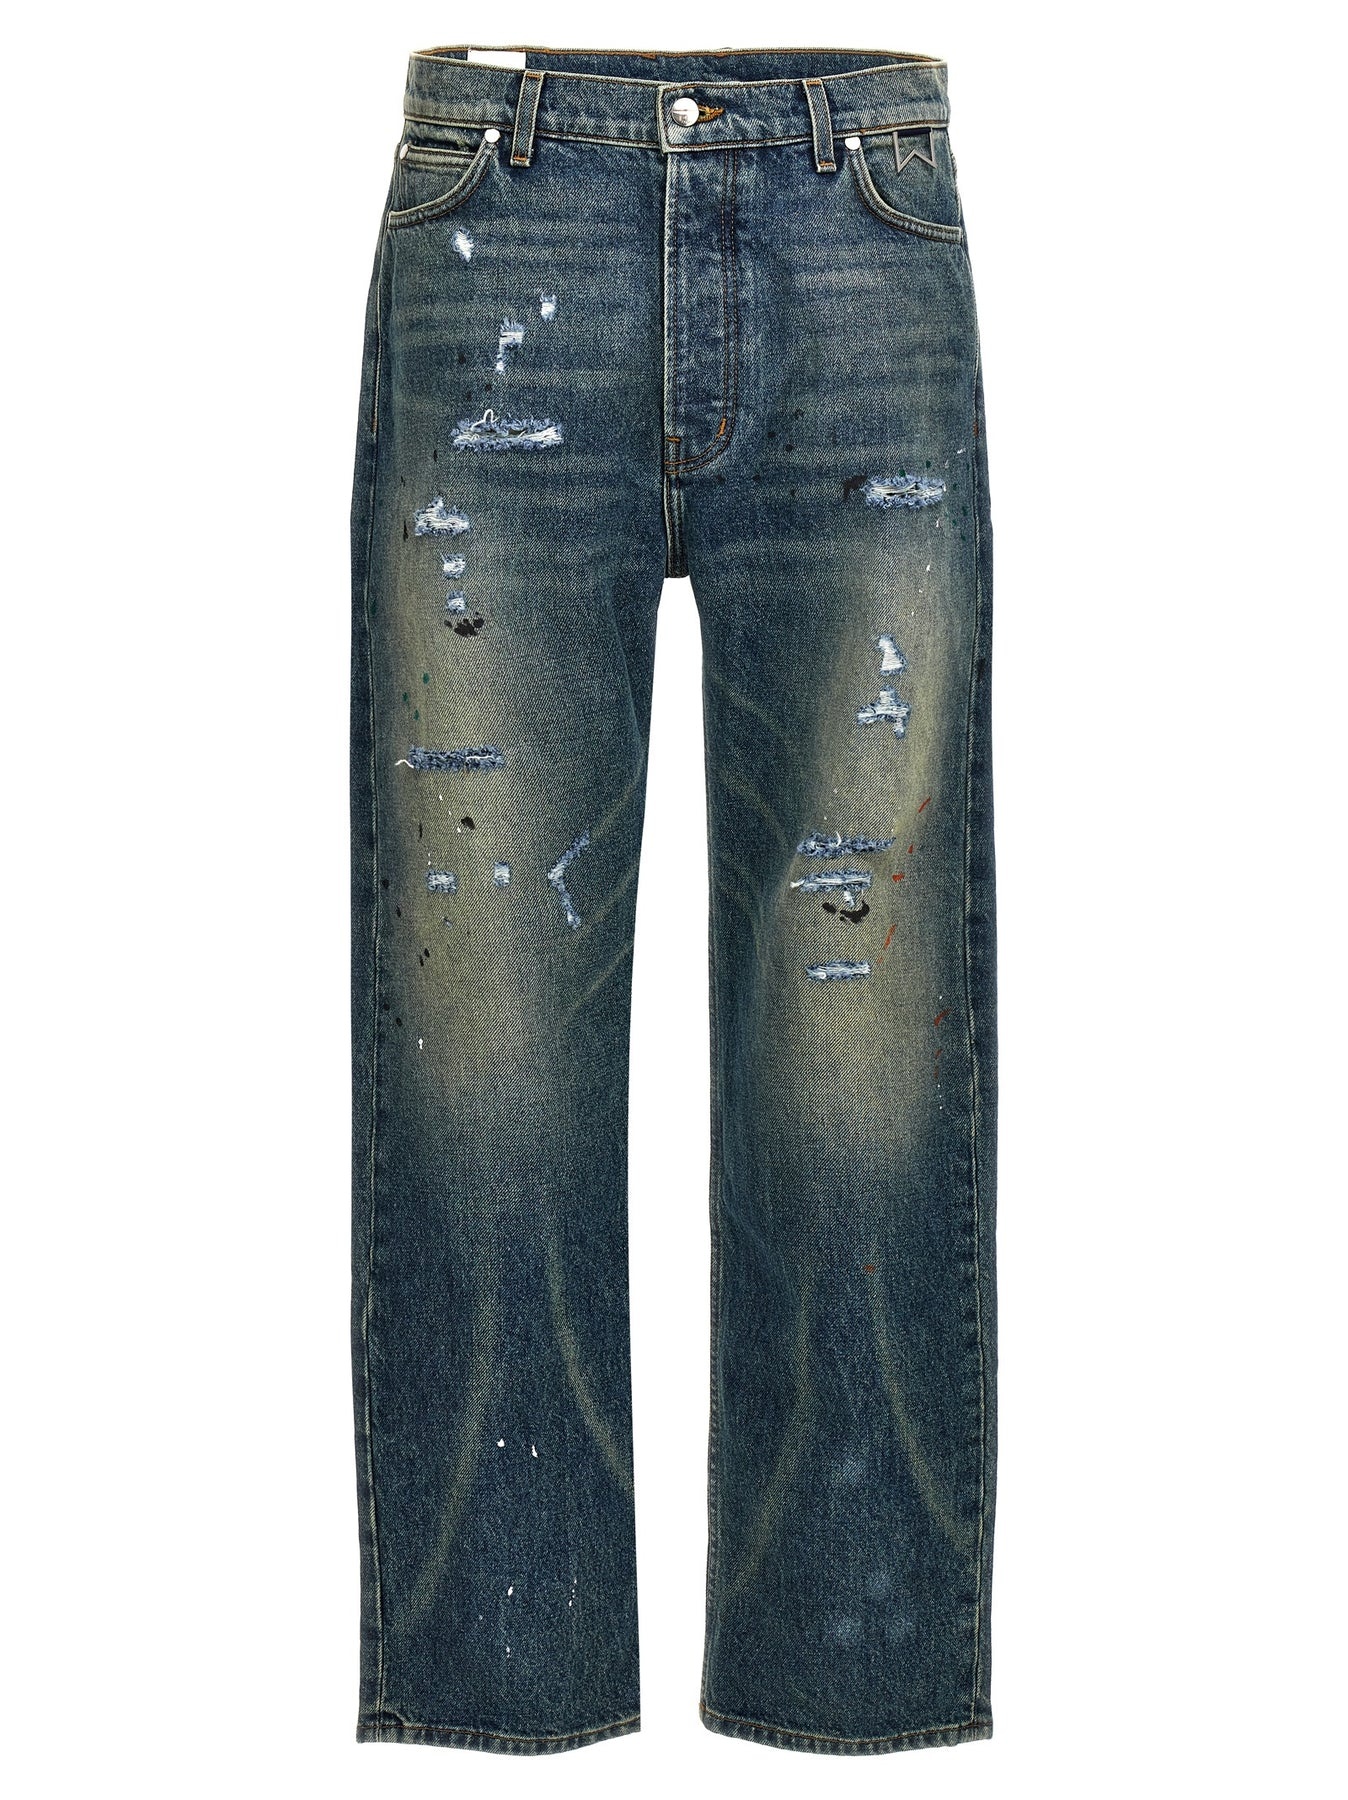 90s Jeans Blue - 1